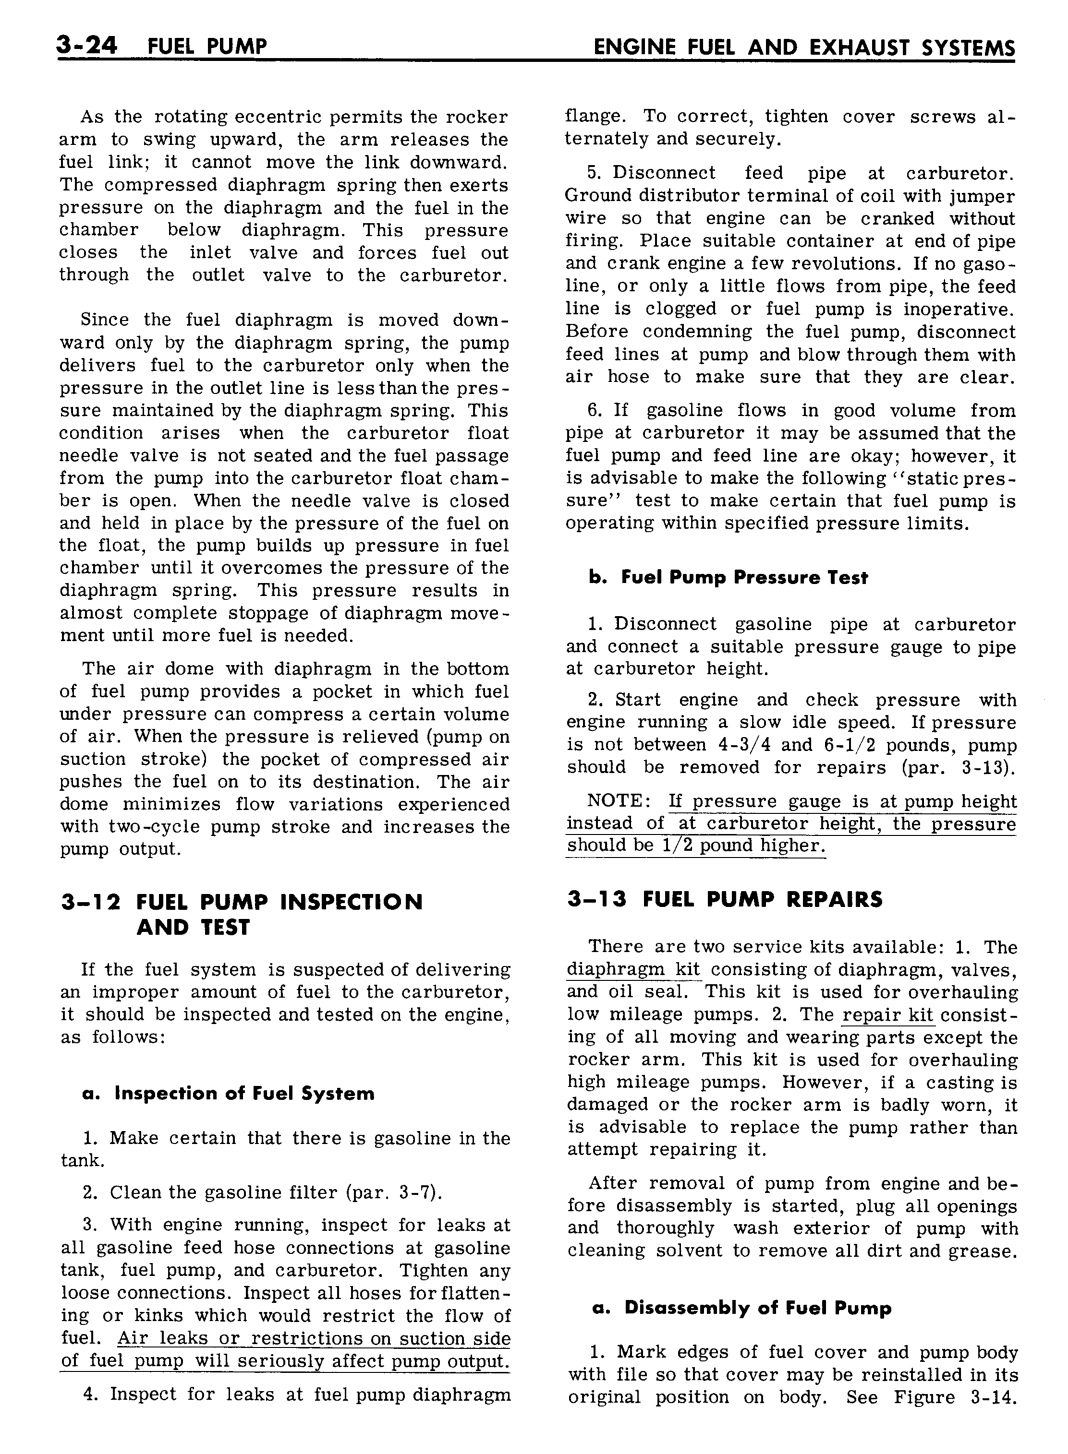 n_04 1961 Buick Shop Manual - Engine Fuel & Exhaust-024-024.jpg